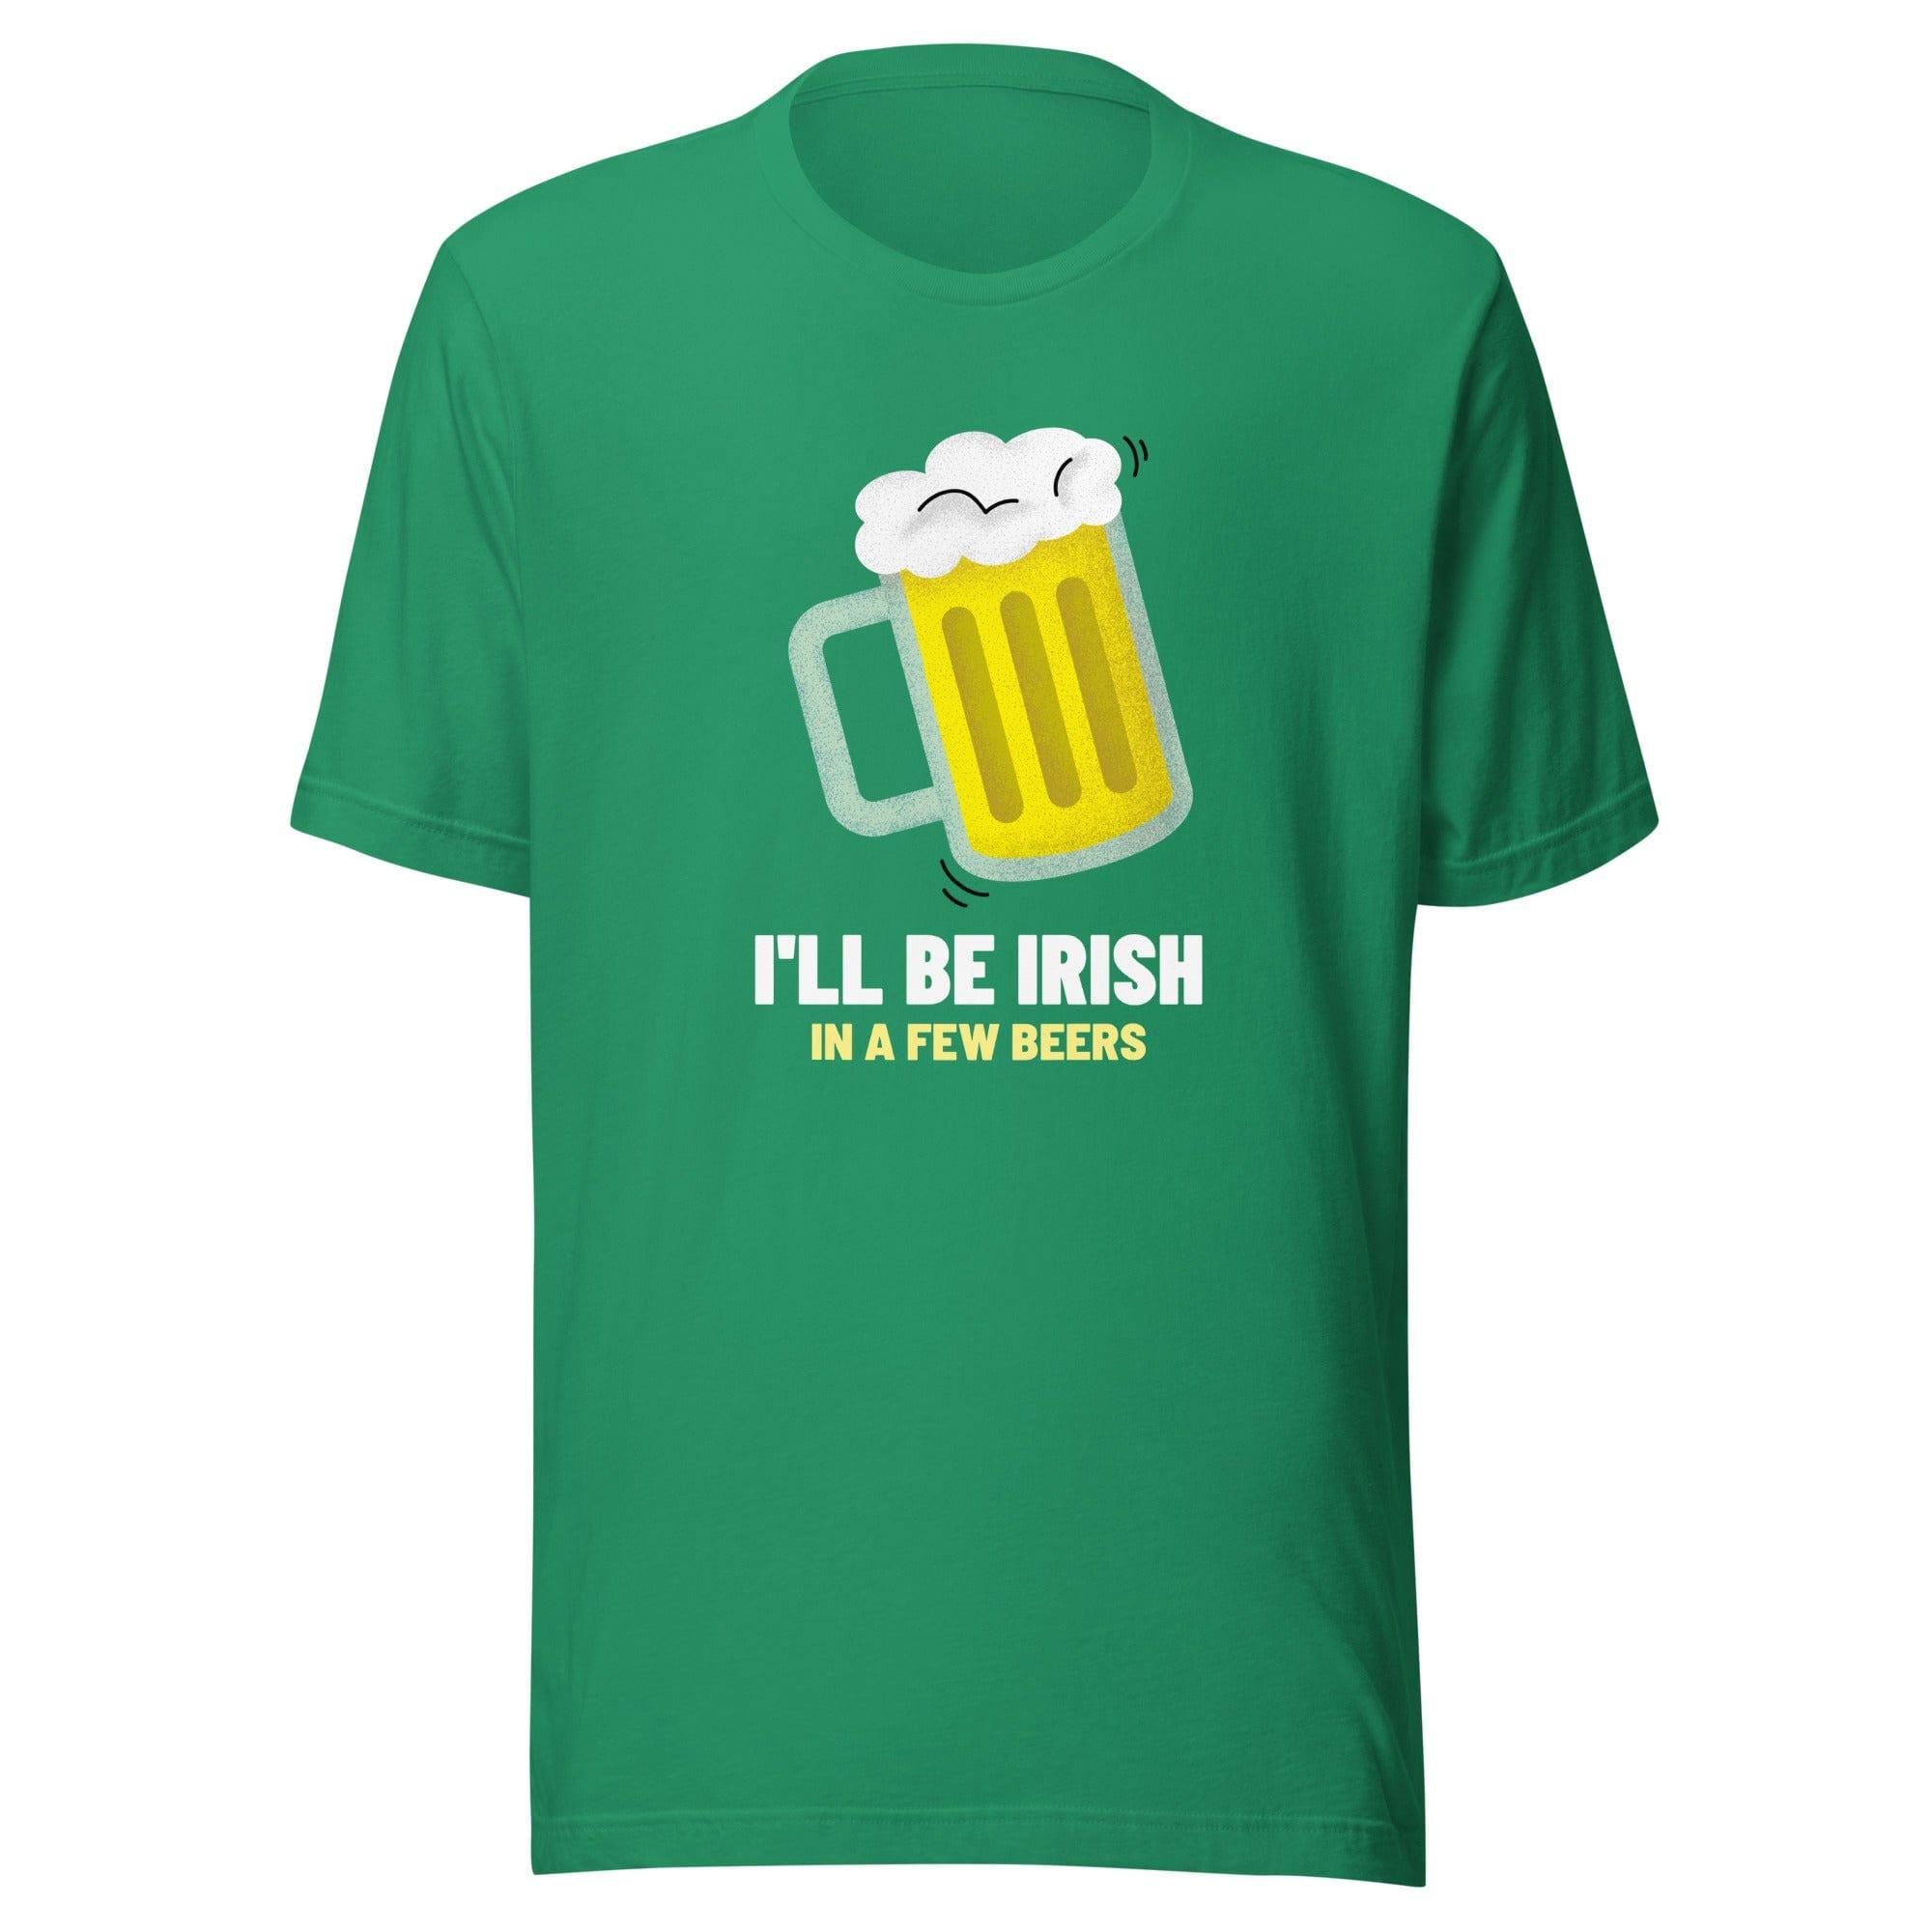 I'll Be Irish in a Few Beers Short Sleeve Unisex t-shirt